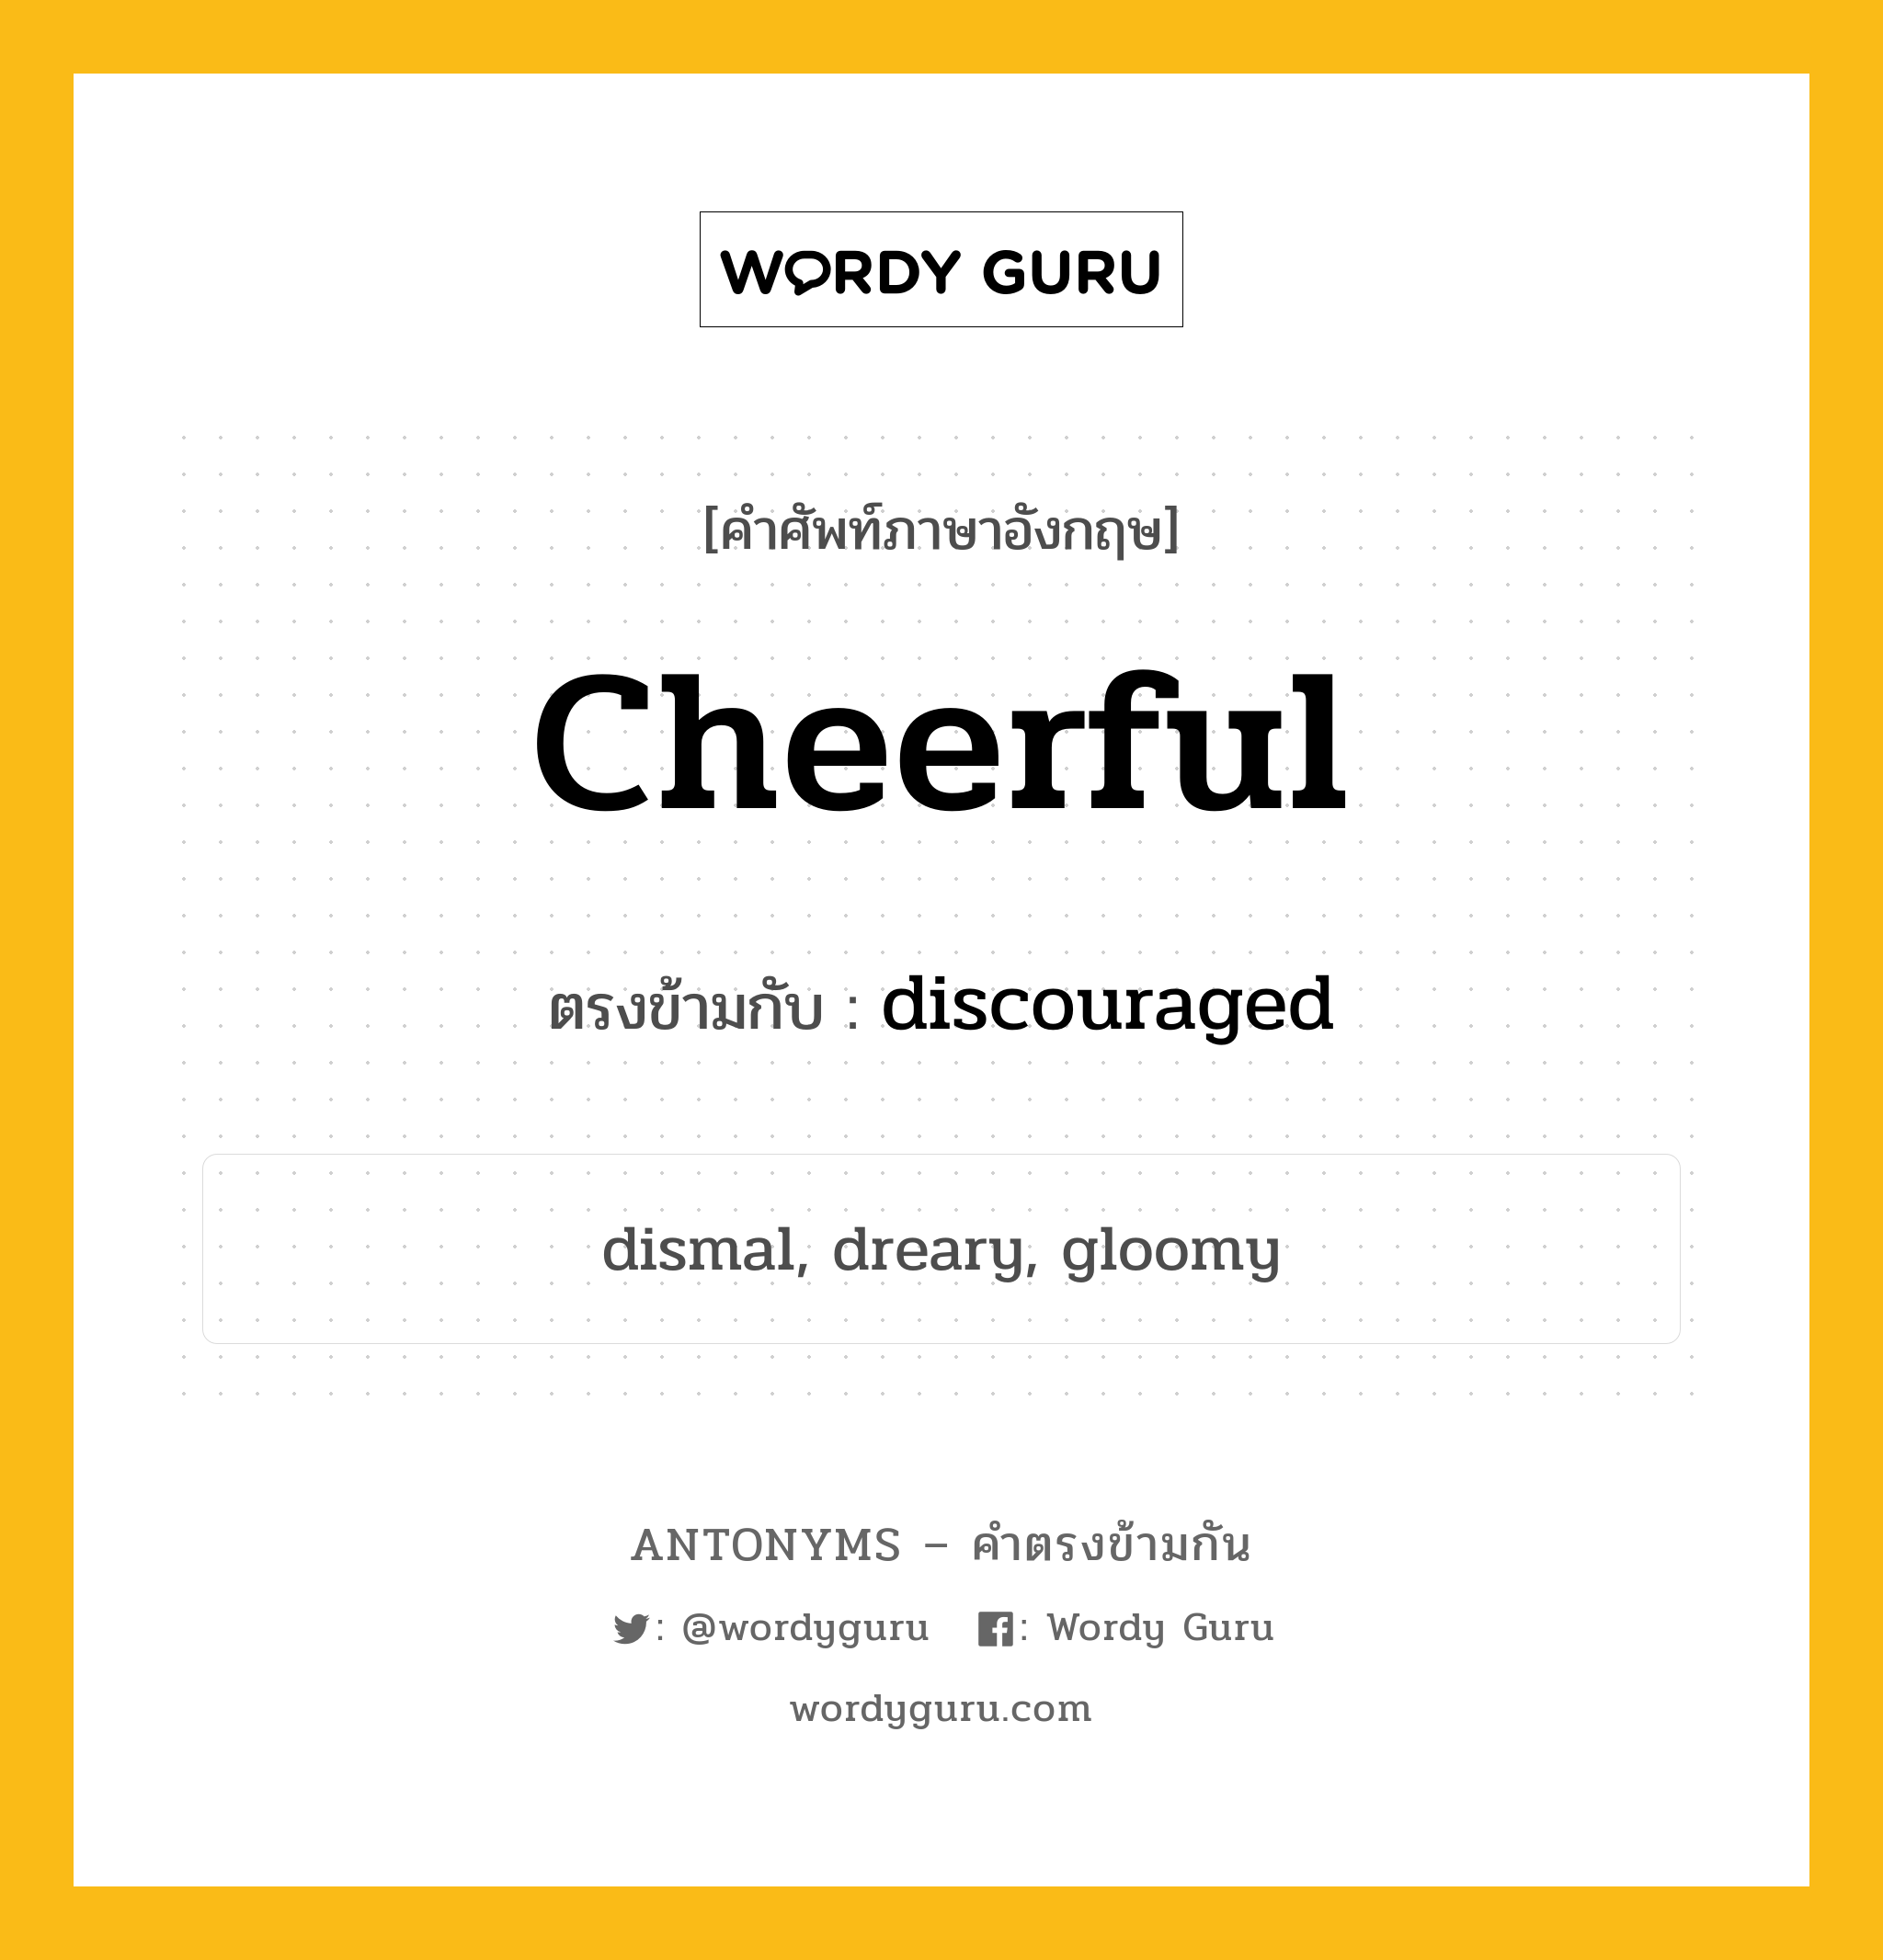 cheerful เป็นคำตรงข้ามกับคำไหนบ้าง?, คำศัพท์ภาษาอังกฤษ cheerful ตรงข้ามกับ discouraged หมวด discouraged